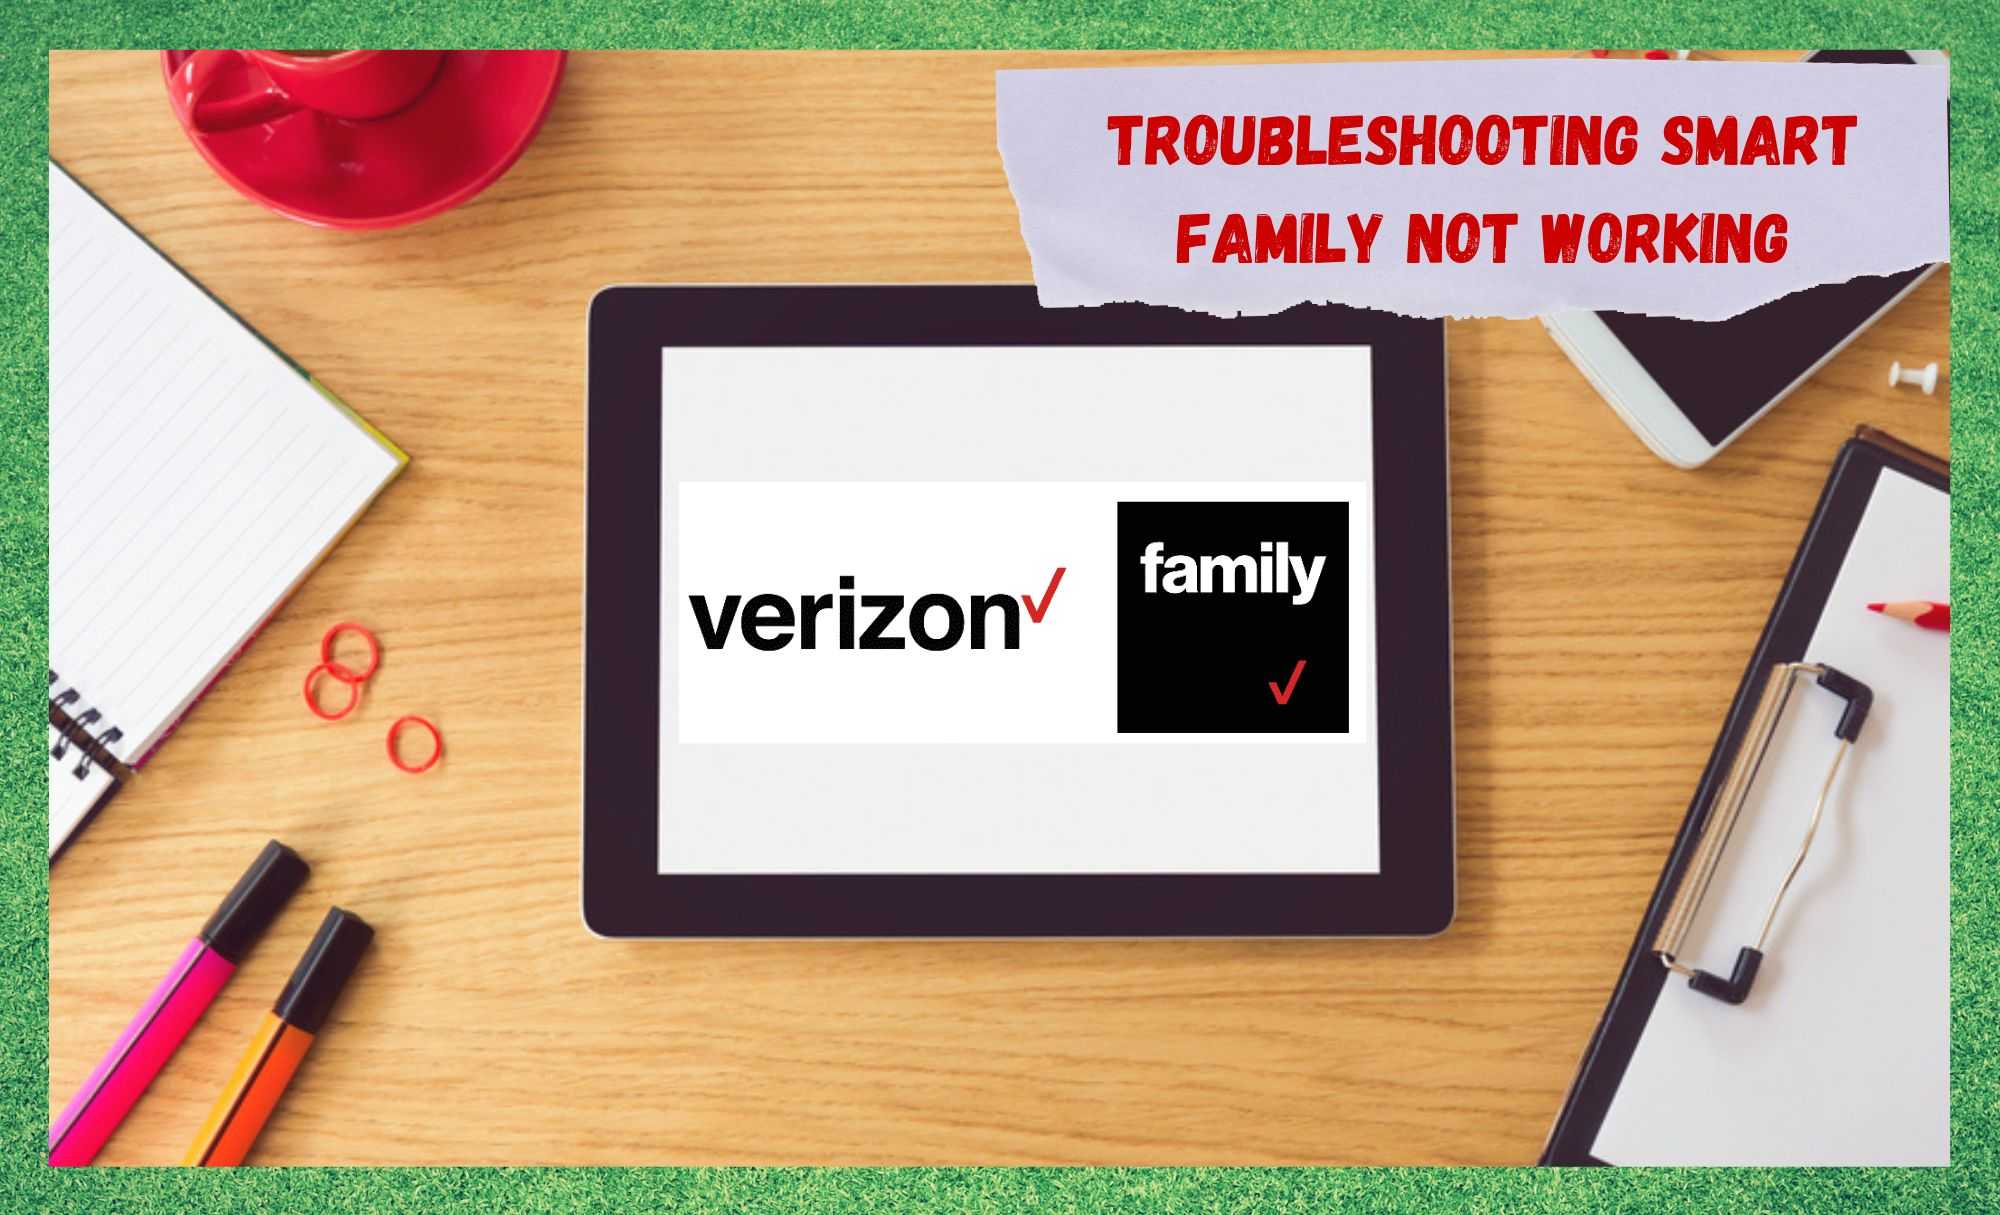 verizon smart family not working